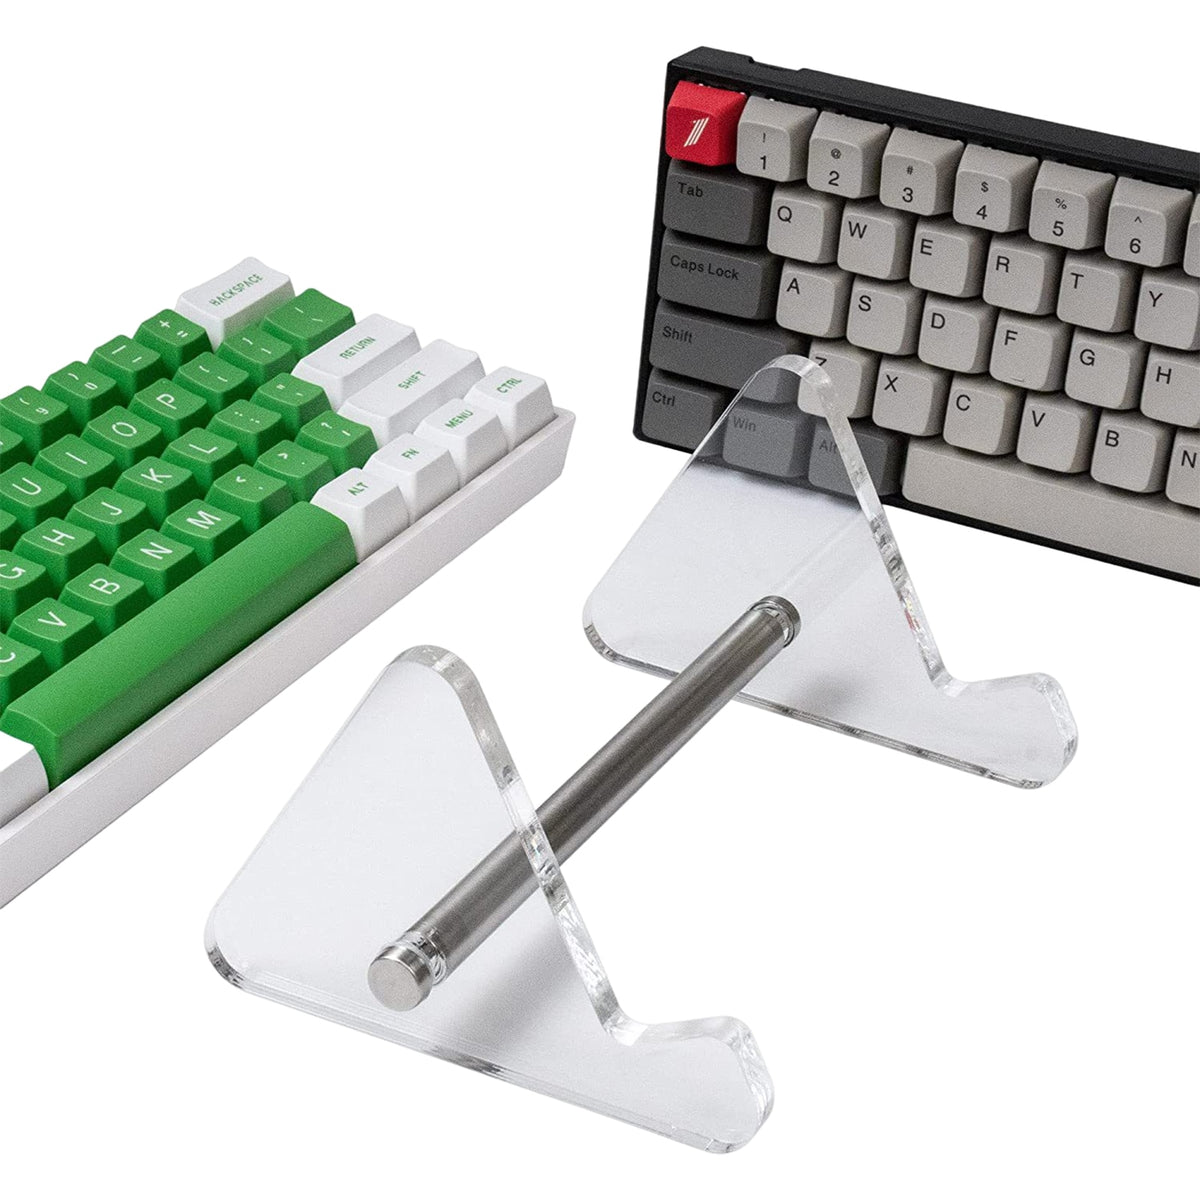 Keyboard Display Holder